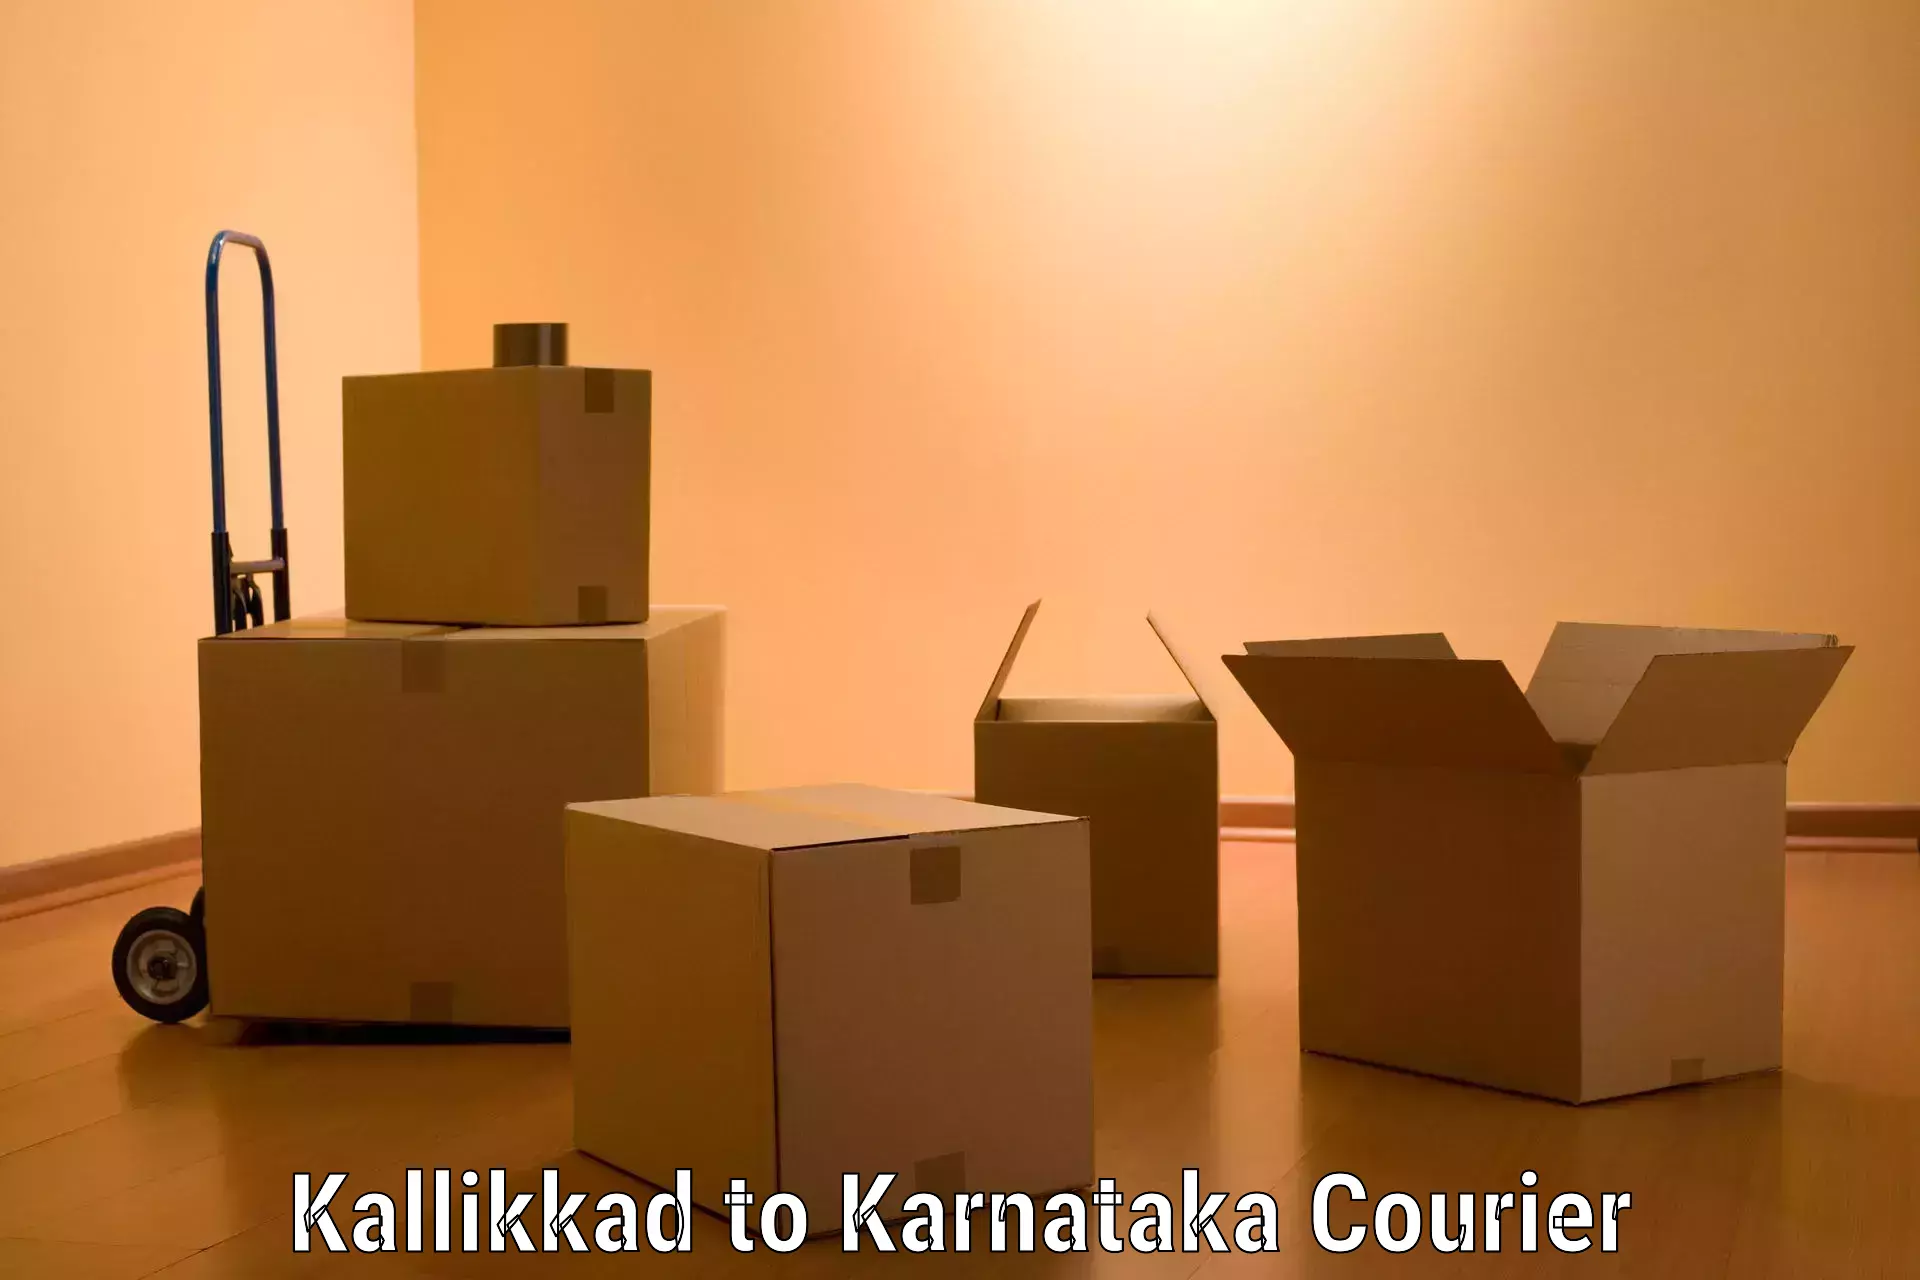 Professional moving company Kallikkad to Karnataka